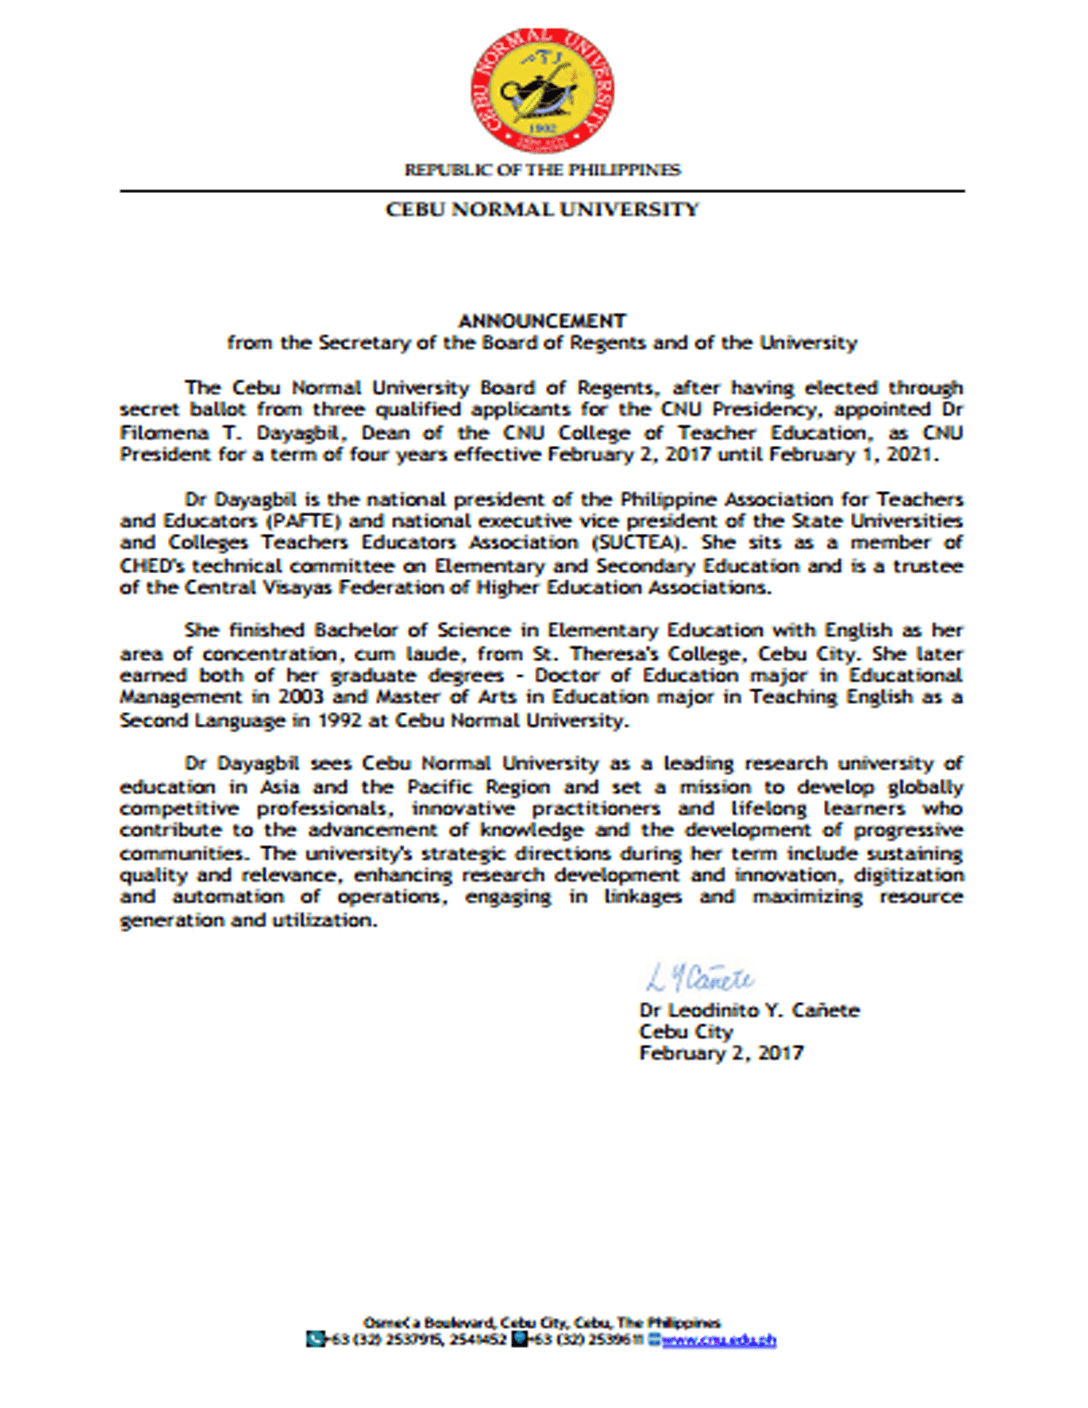 Dr Filomena T. Dayagbil is the new President of Cebu Normal University